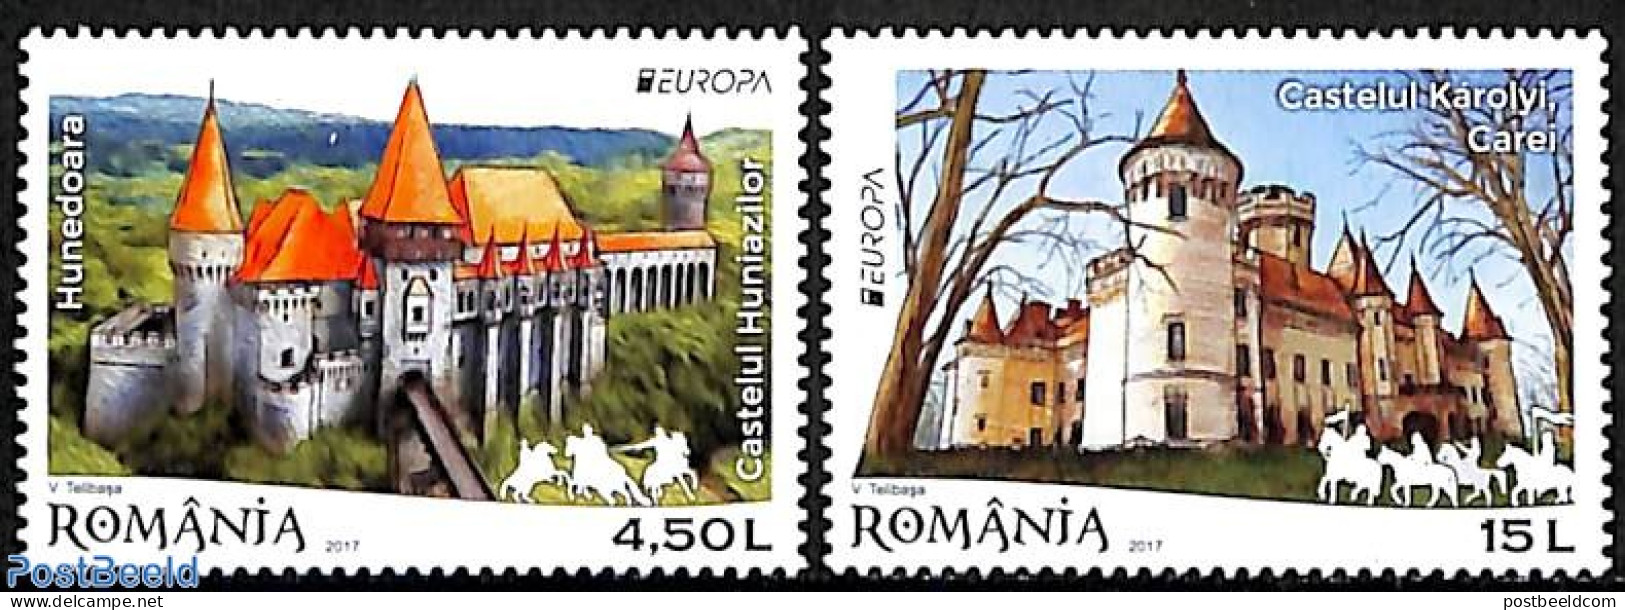 Romania 2017 Europa, Castles 2v, Mint NH, History - Europa (cept) - Art - Castles & Fortifications - Ongebruikt